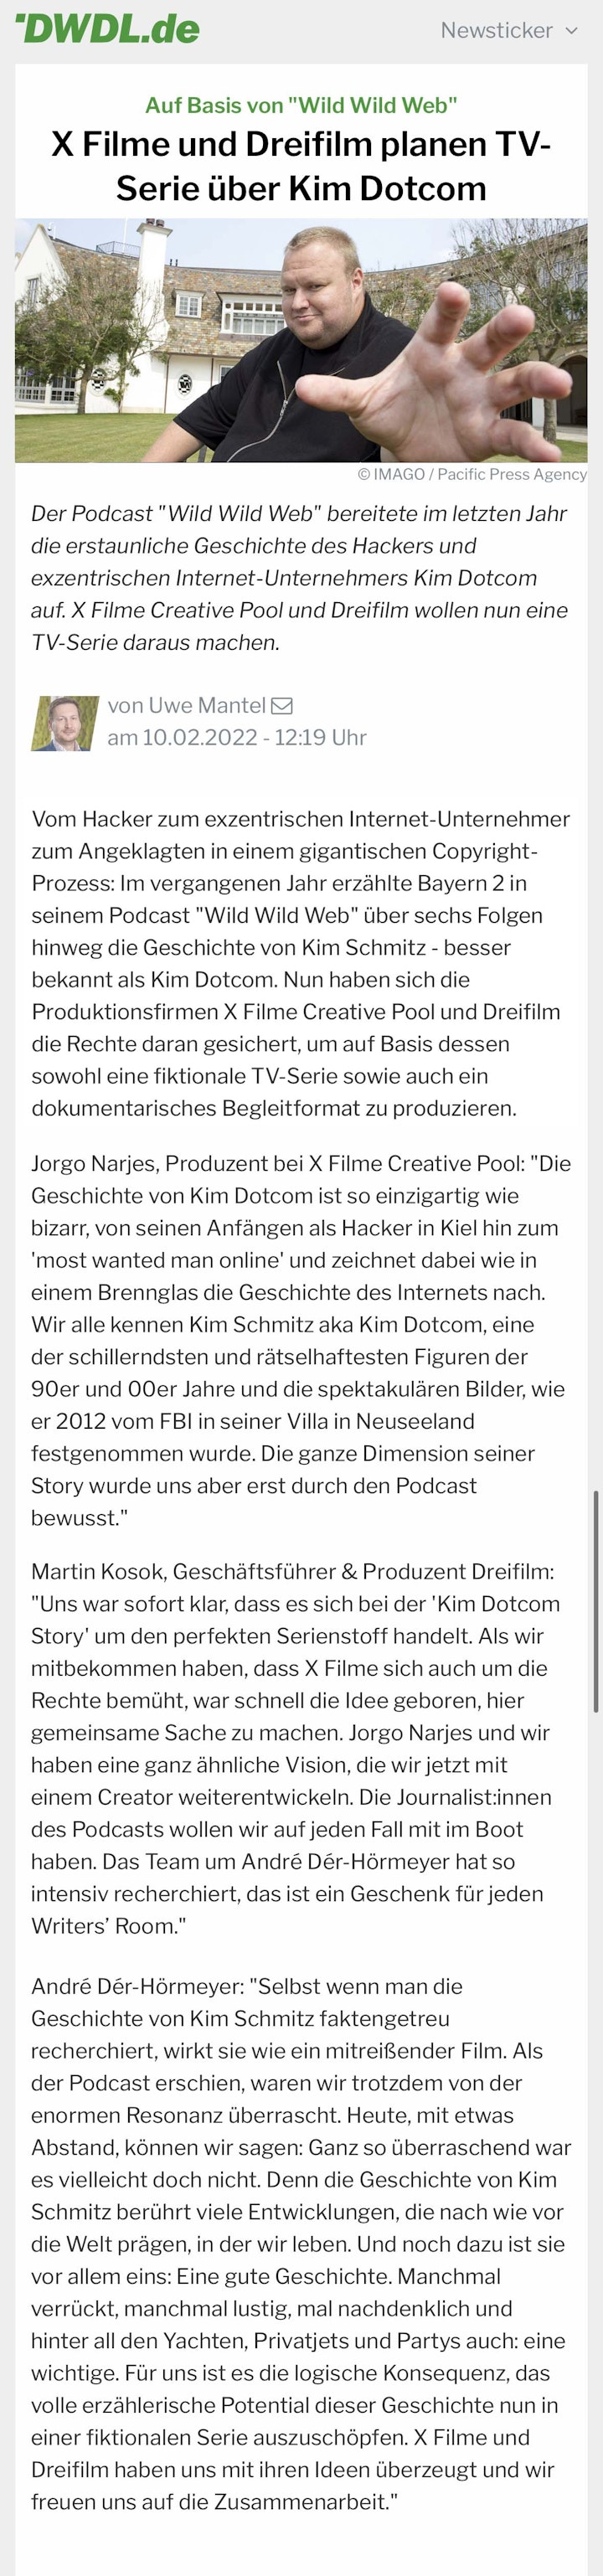 X Filme und DREIFILM planen Serie über Kim Dotcom